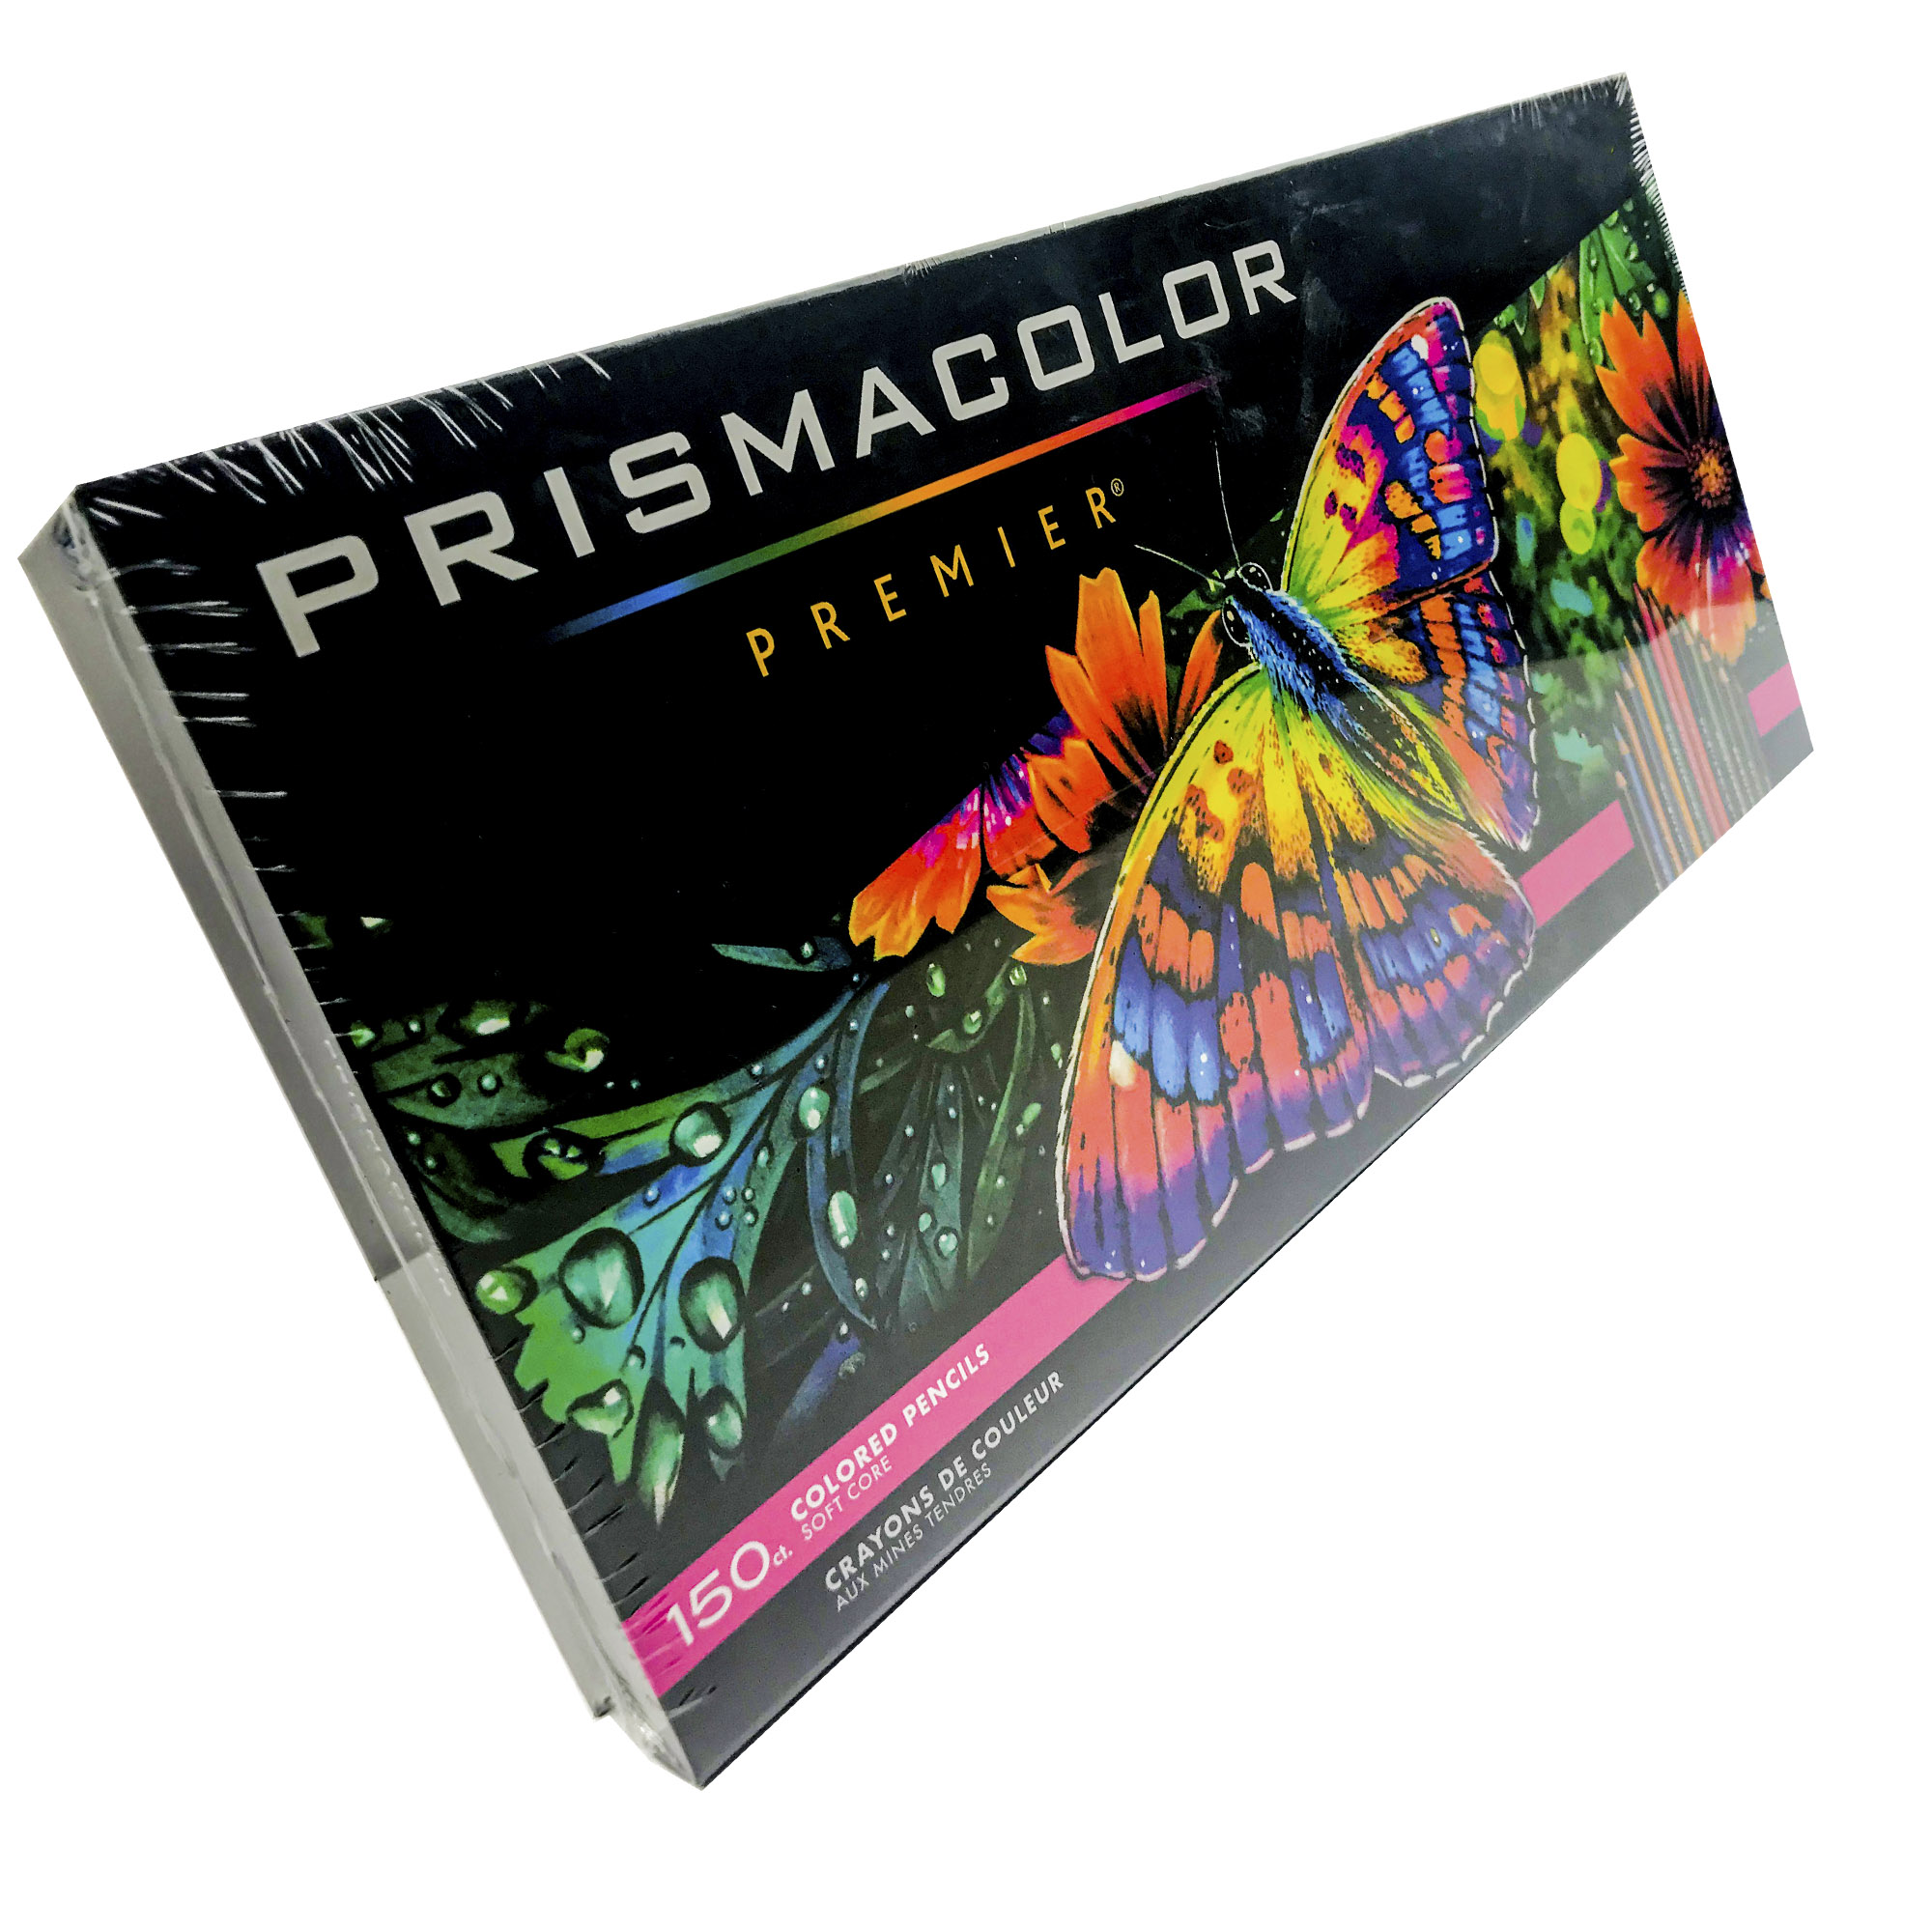 Optimal Pricing colores prismacolor 